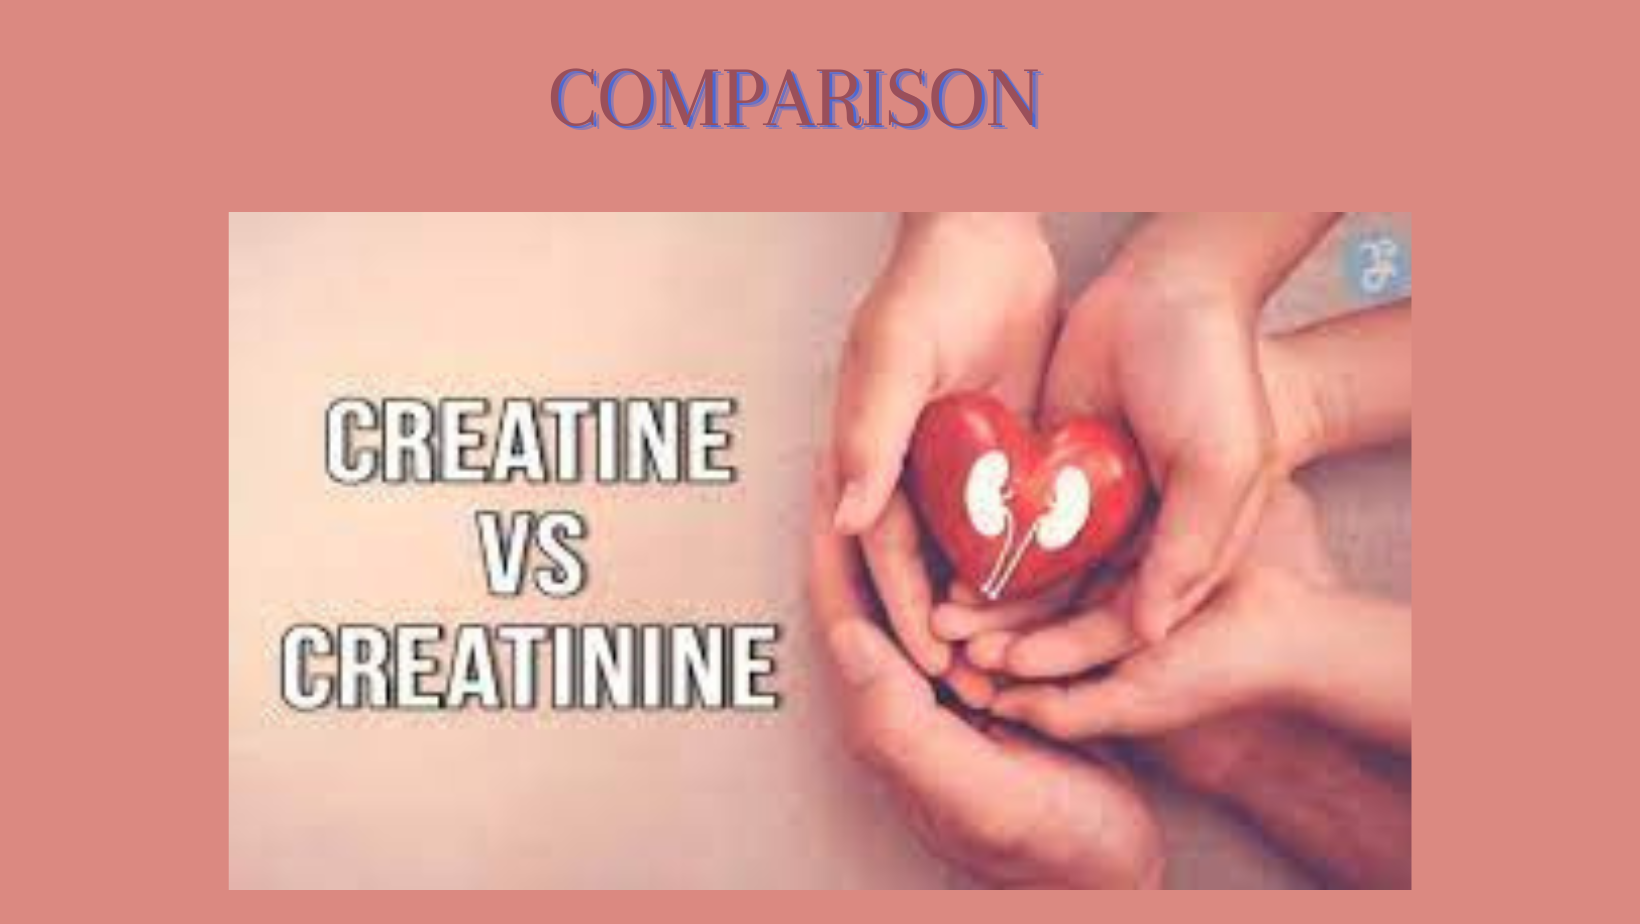 Comparison of creatine vs creatinine